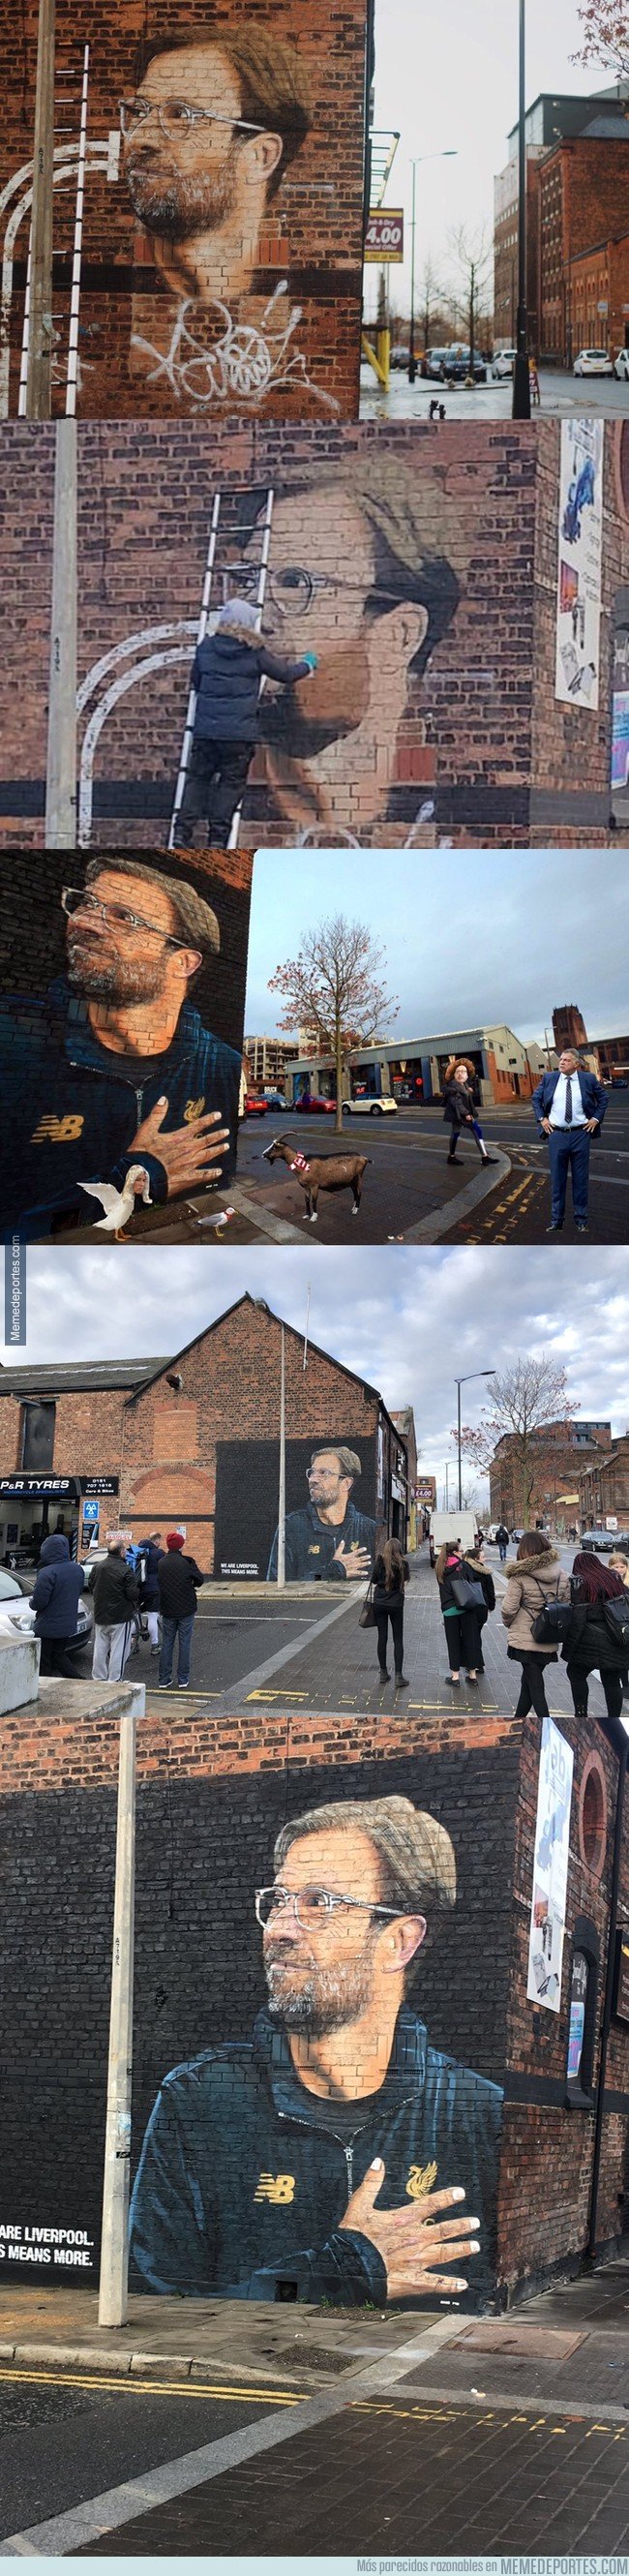 1058770 - El espectacular mural de Klopp en un conflictivo sector de Liverpool